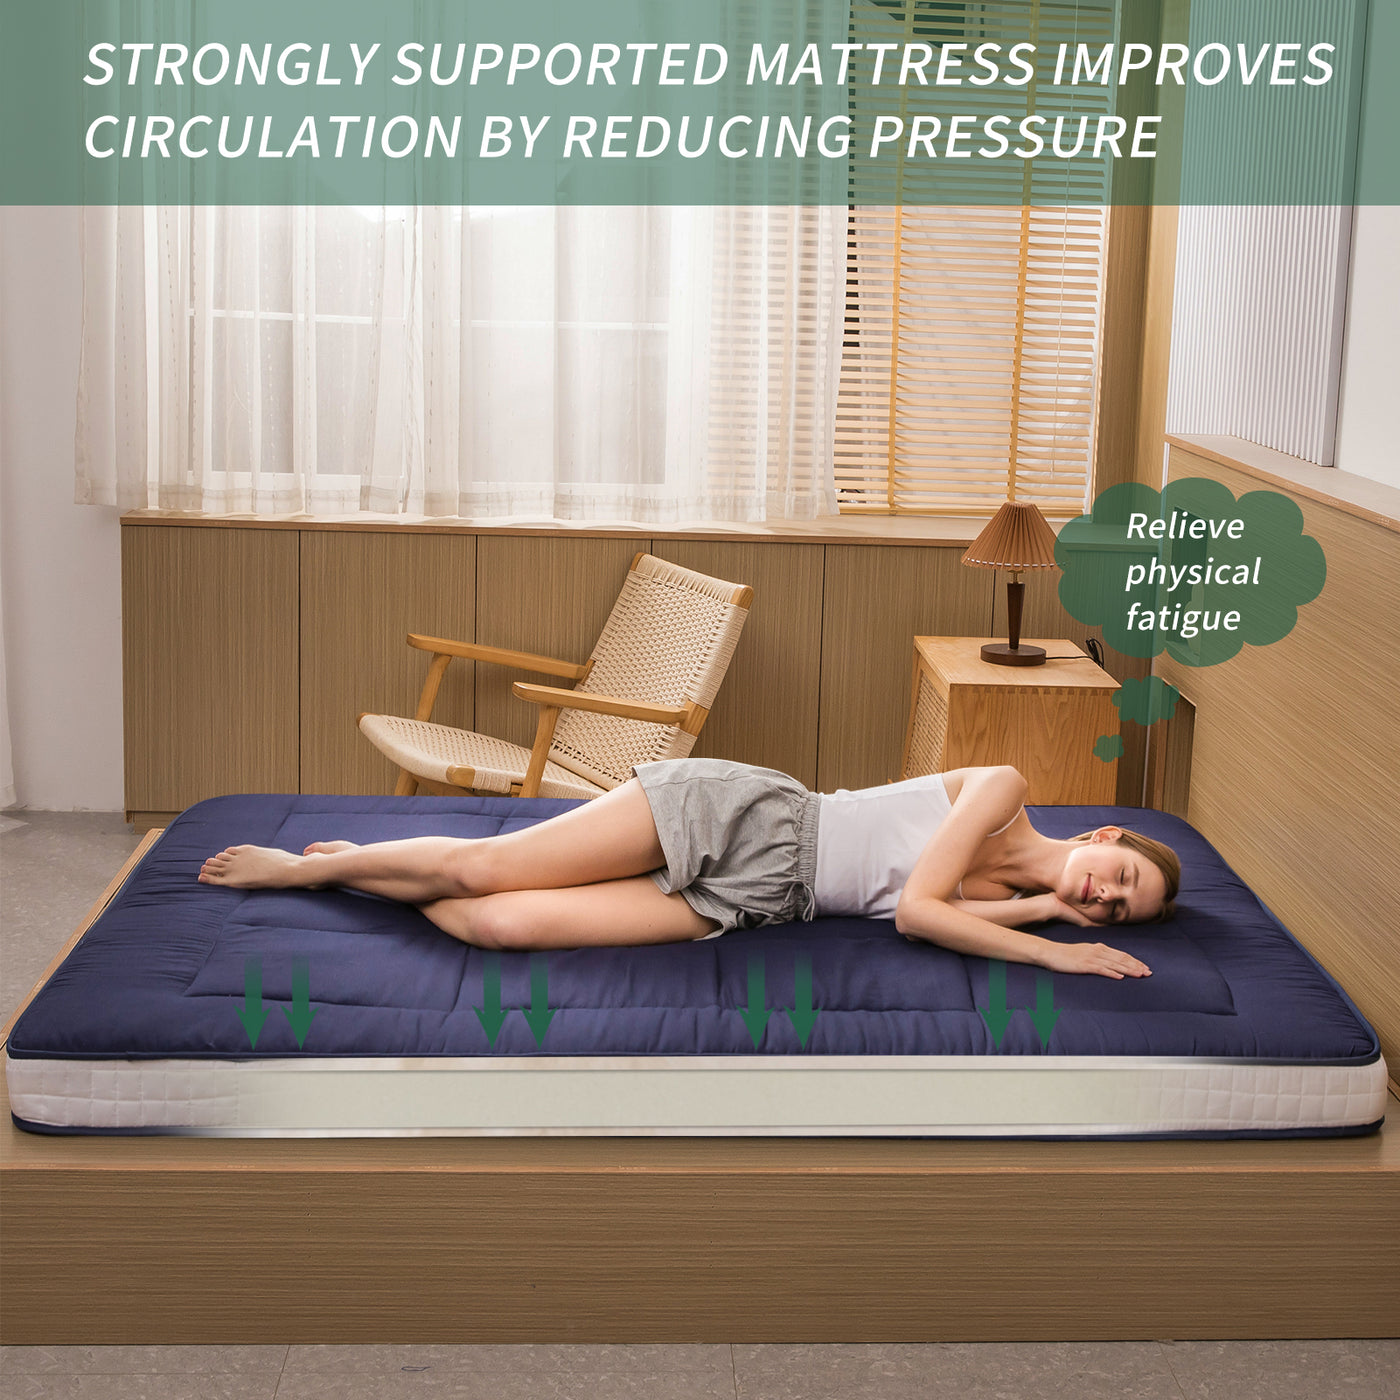 futon mattress#color_navy